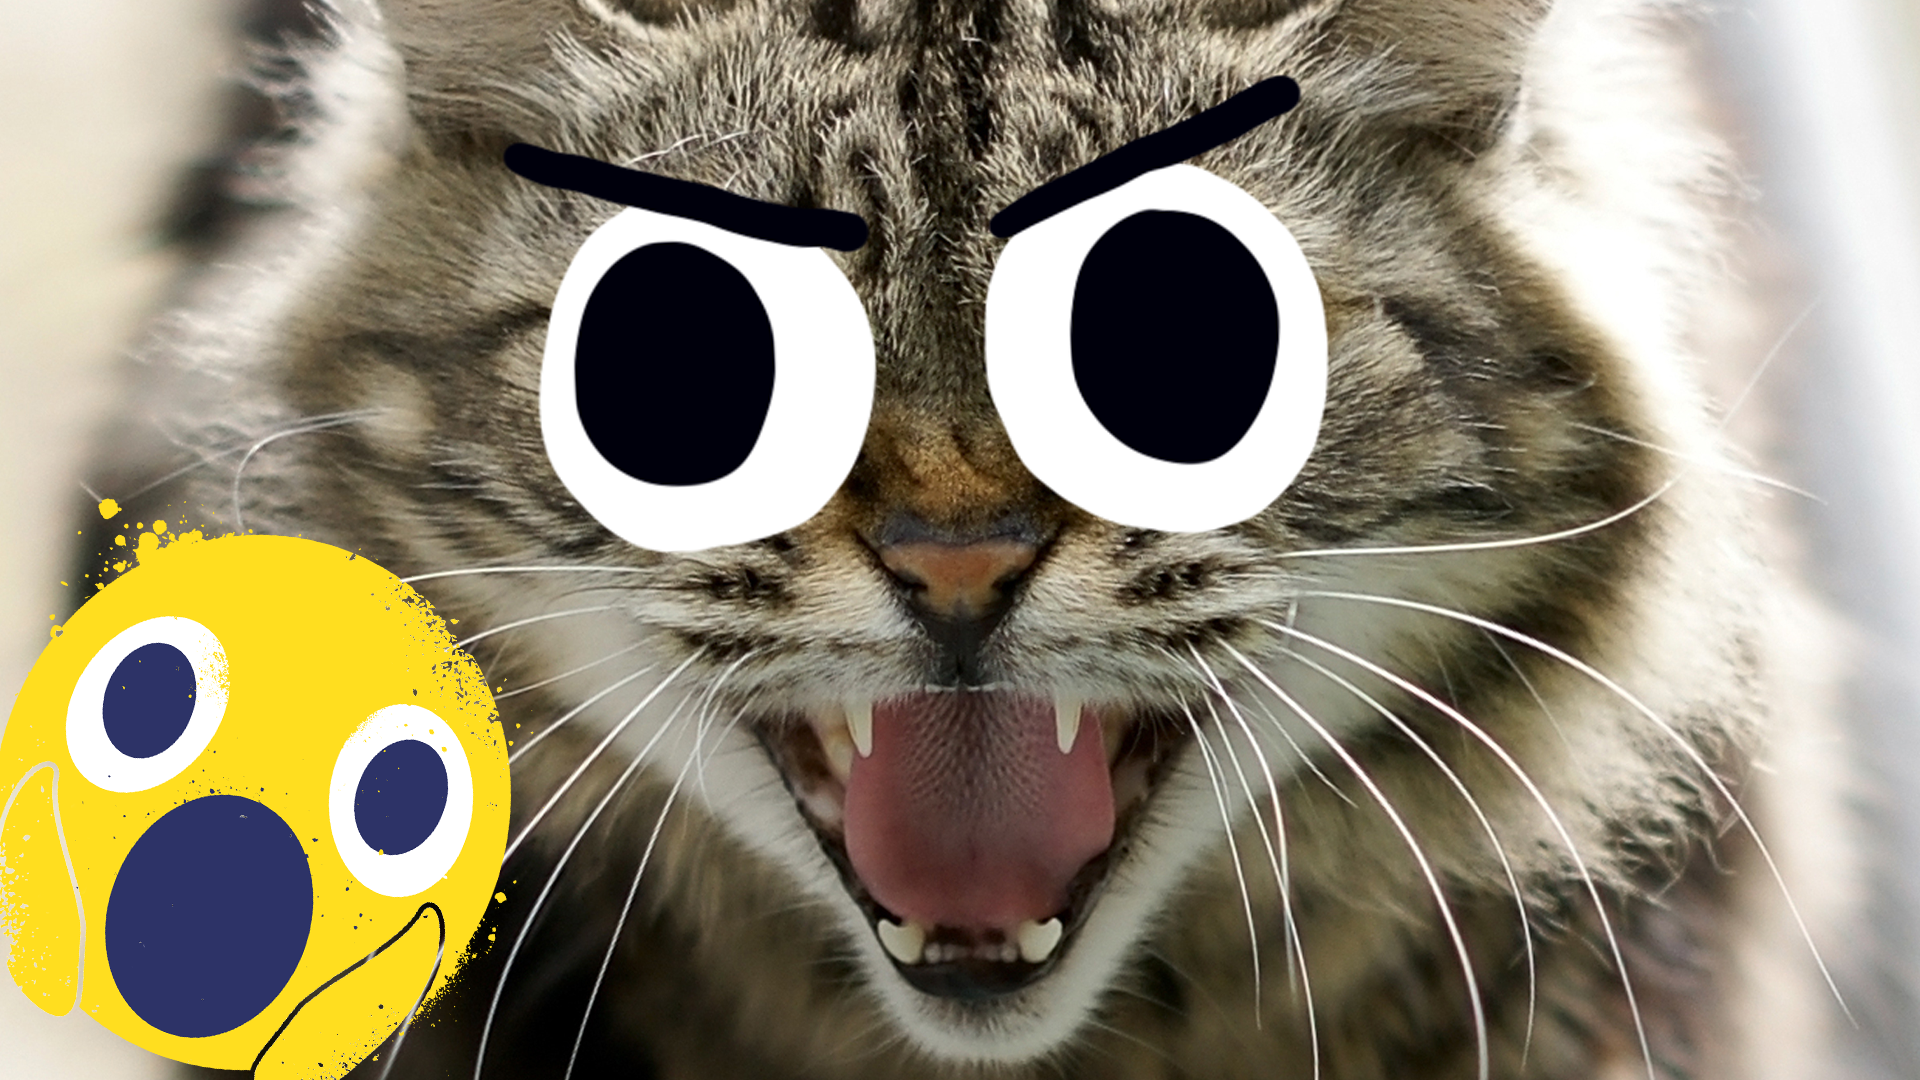 A cat hissing at a shocked emoji